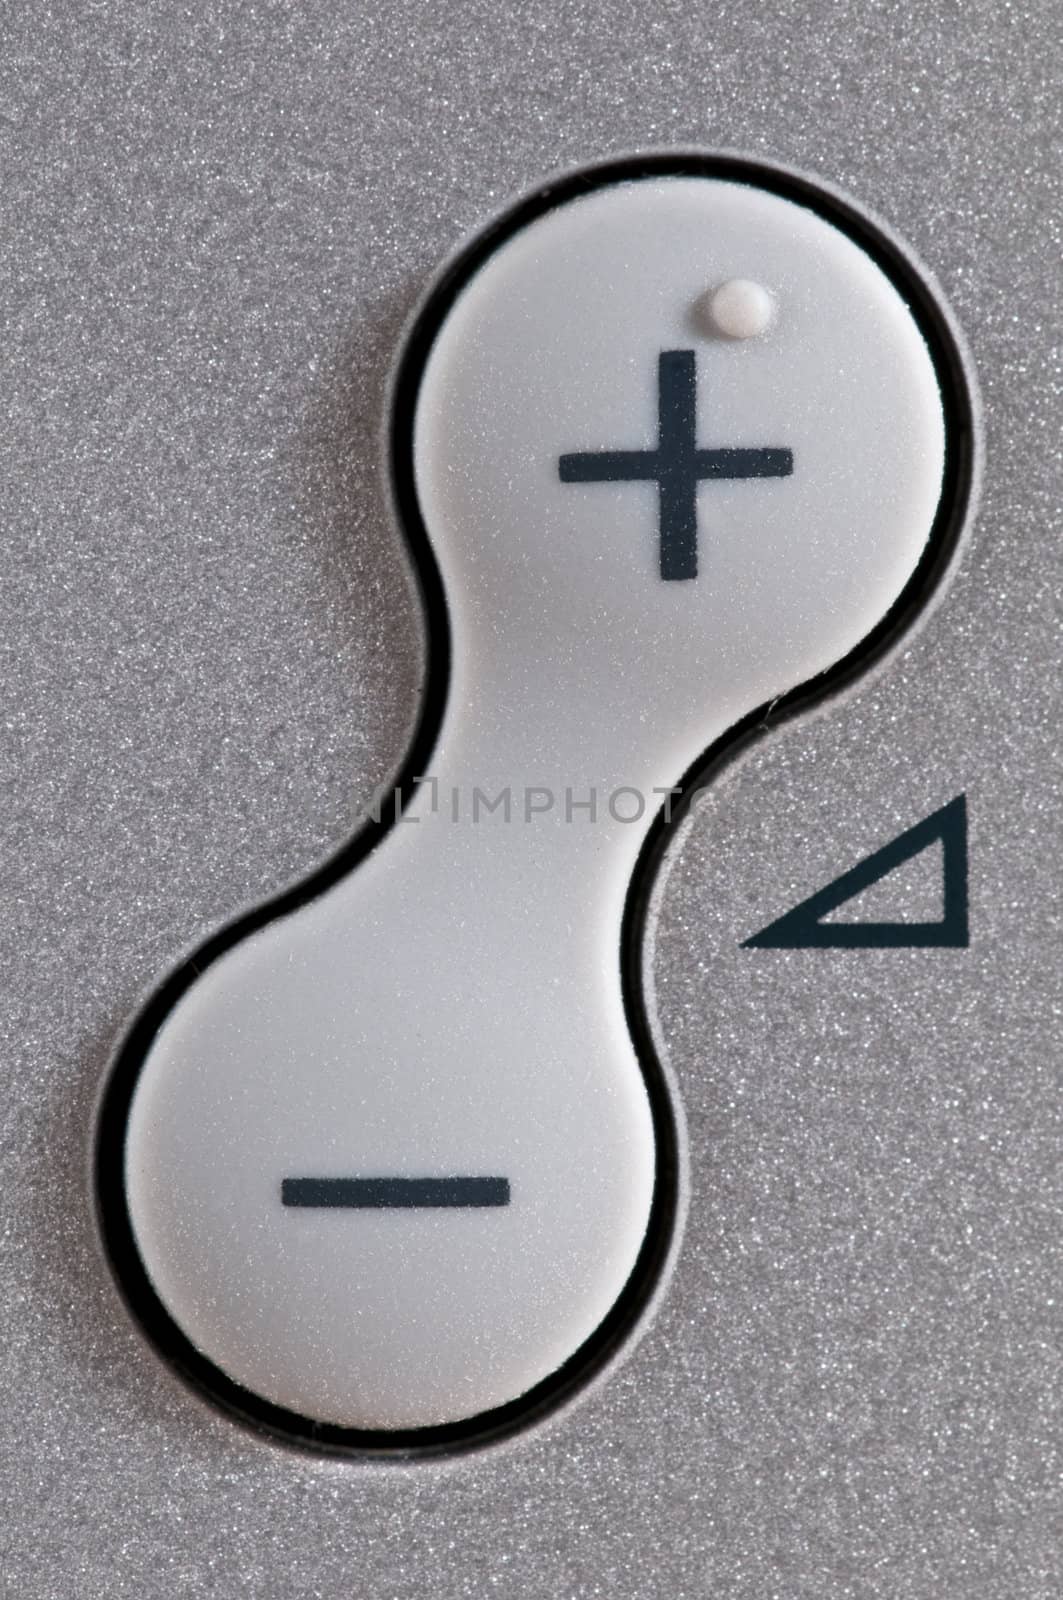 Closeup of an electronic volume button